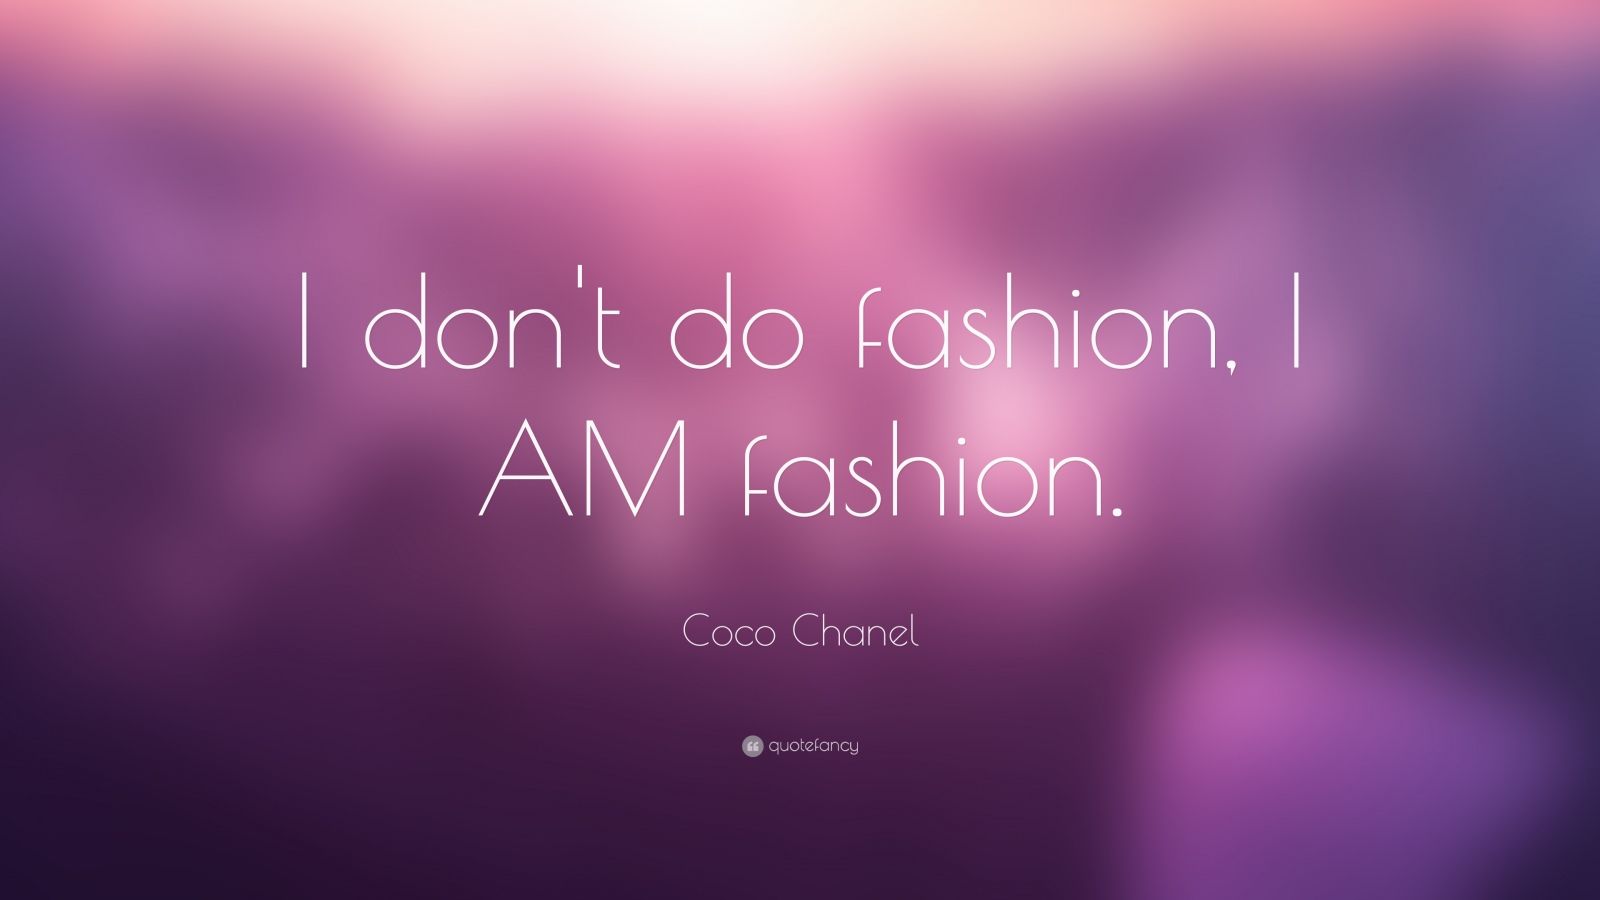 Coco Chanel Quote: “I don't do fashion, I AM fashion.”